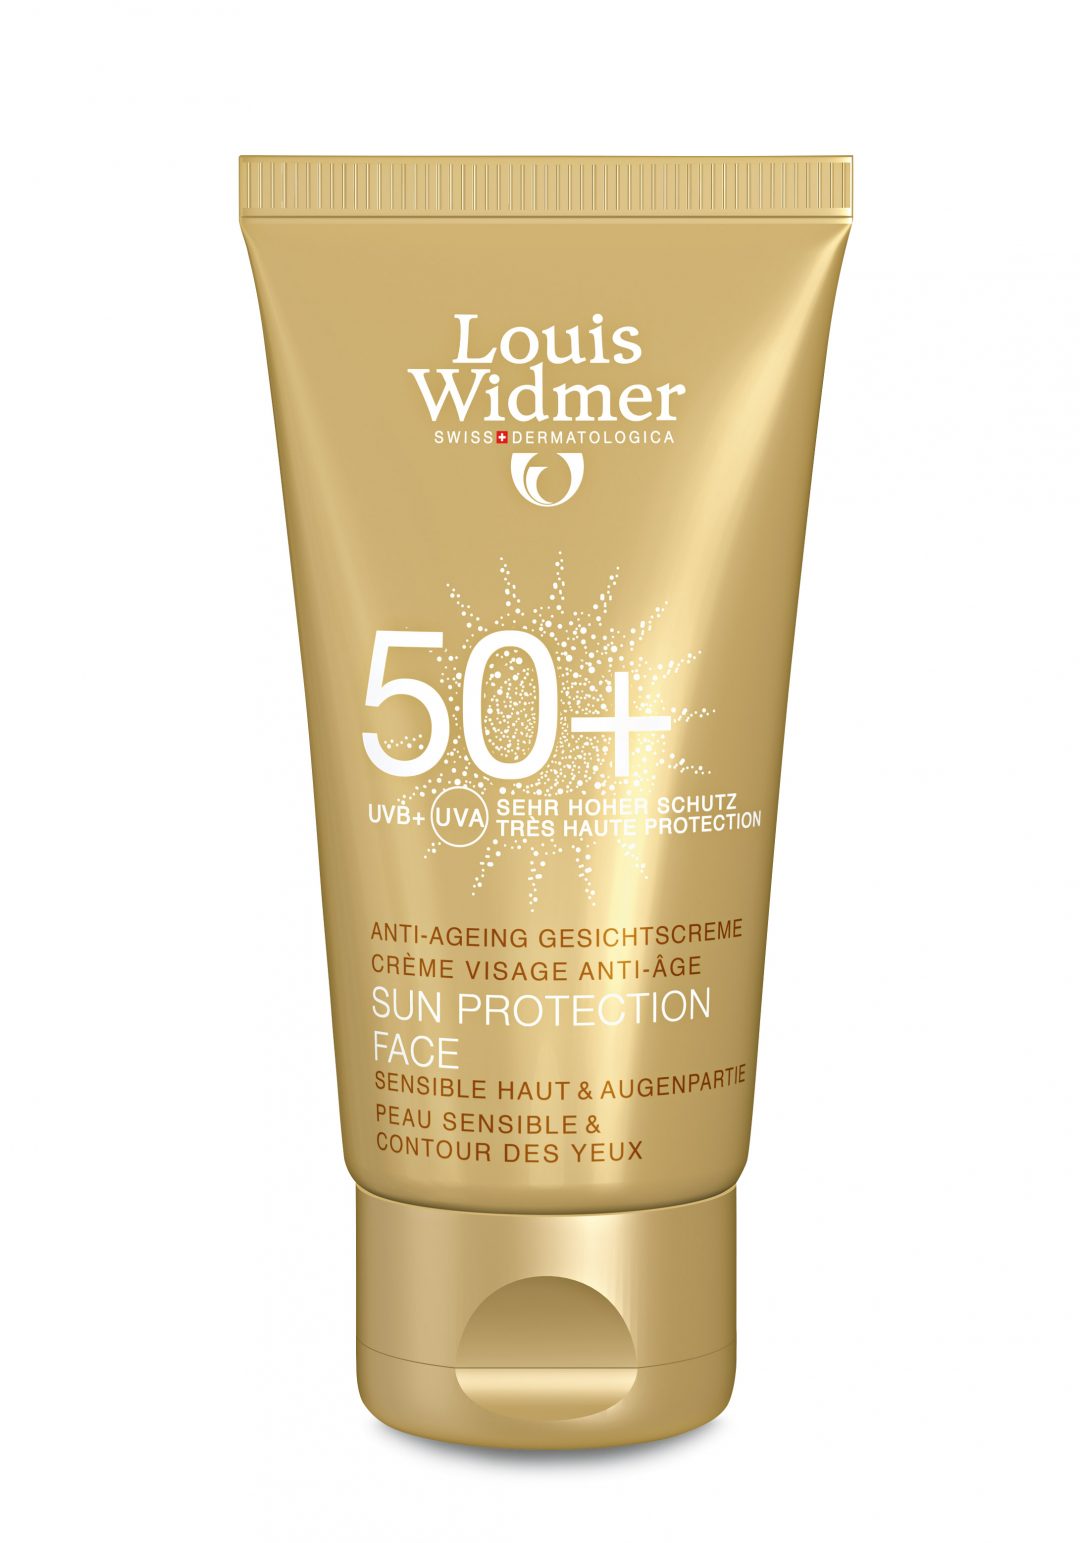 NIEUW! Louis Widmer Sun Protection Face SPF 50+